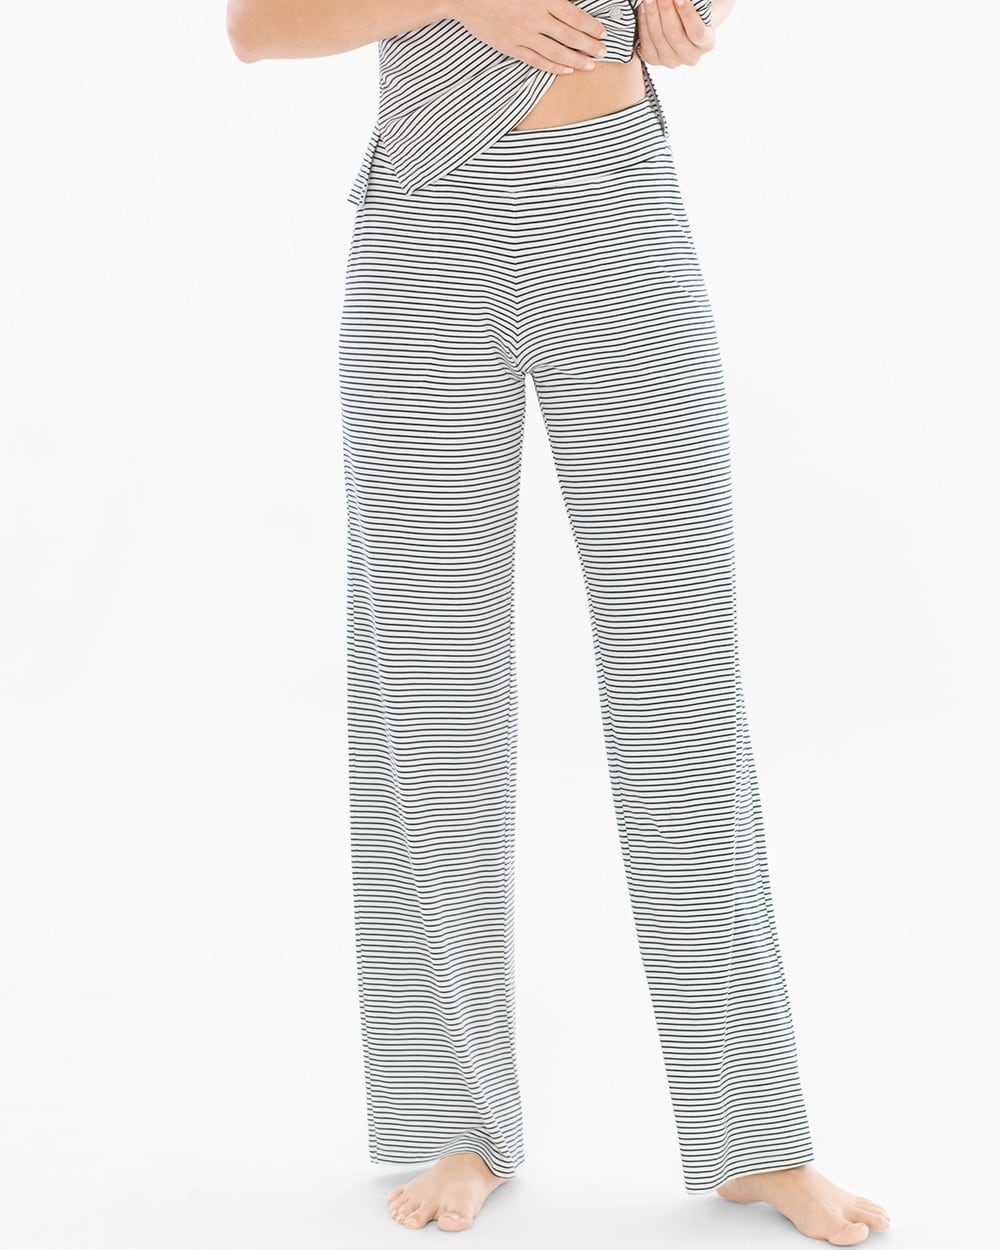 Cool Nights Pajama Pants Infinite Stripe Ivory